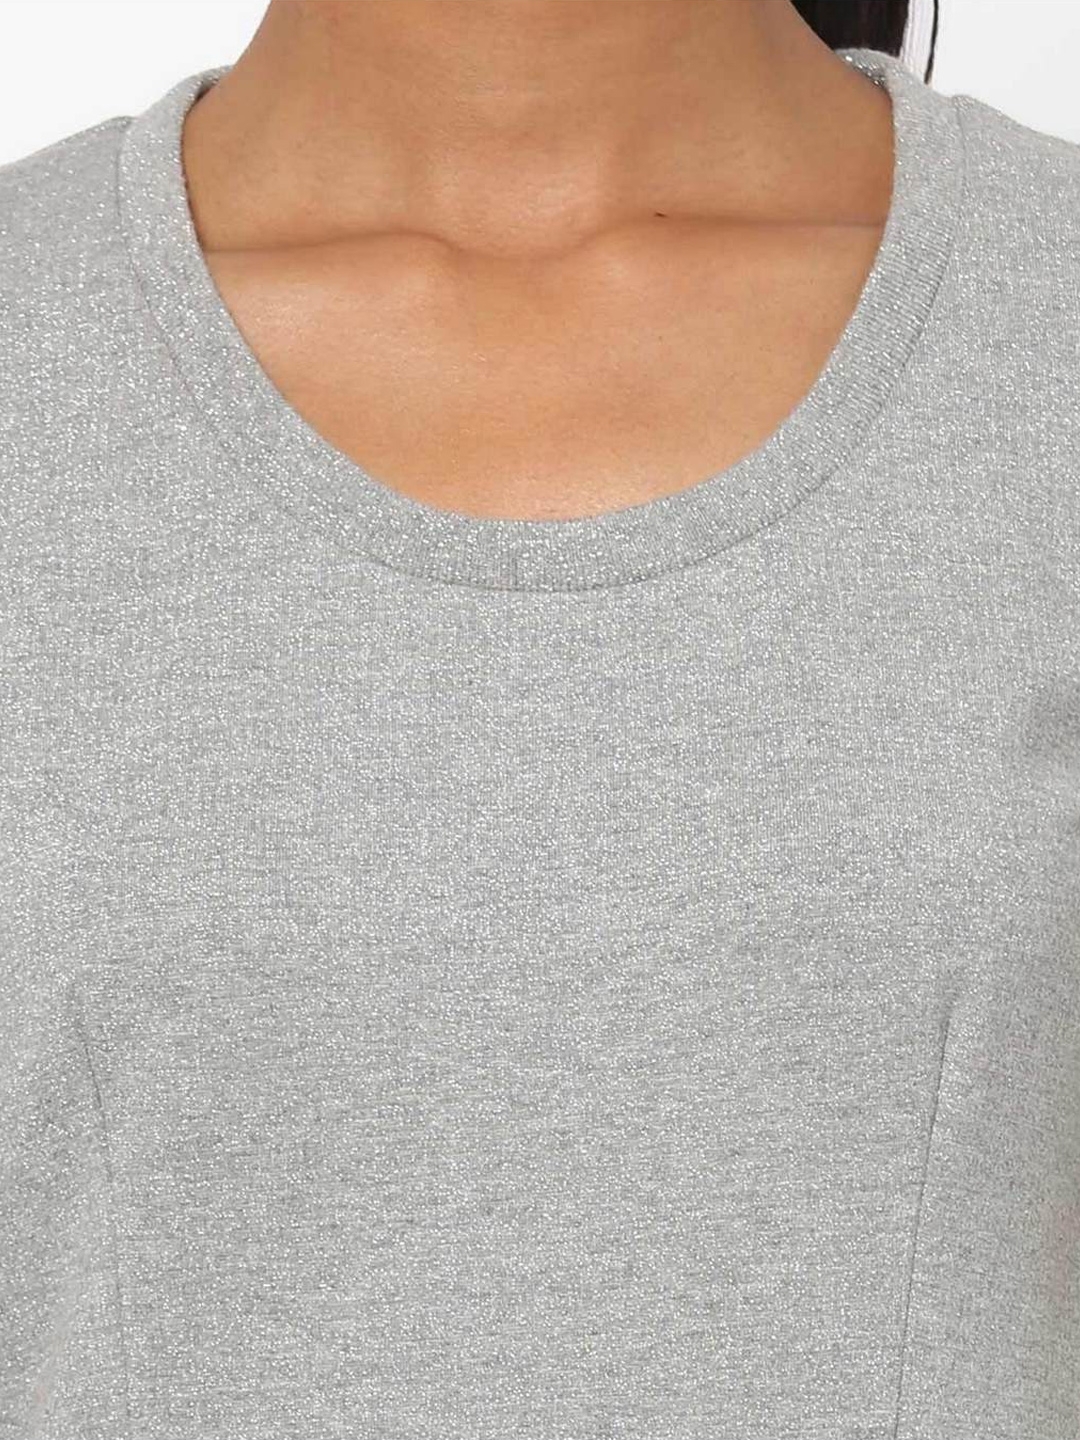 Women's slim fit round neck half sleeves Lellys t-shirt dress